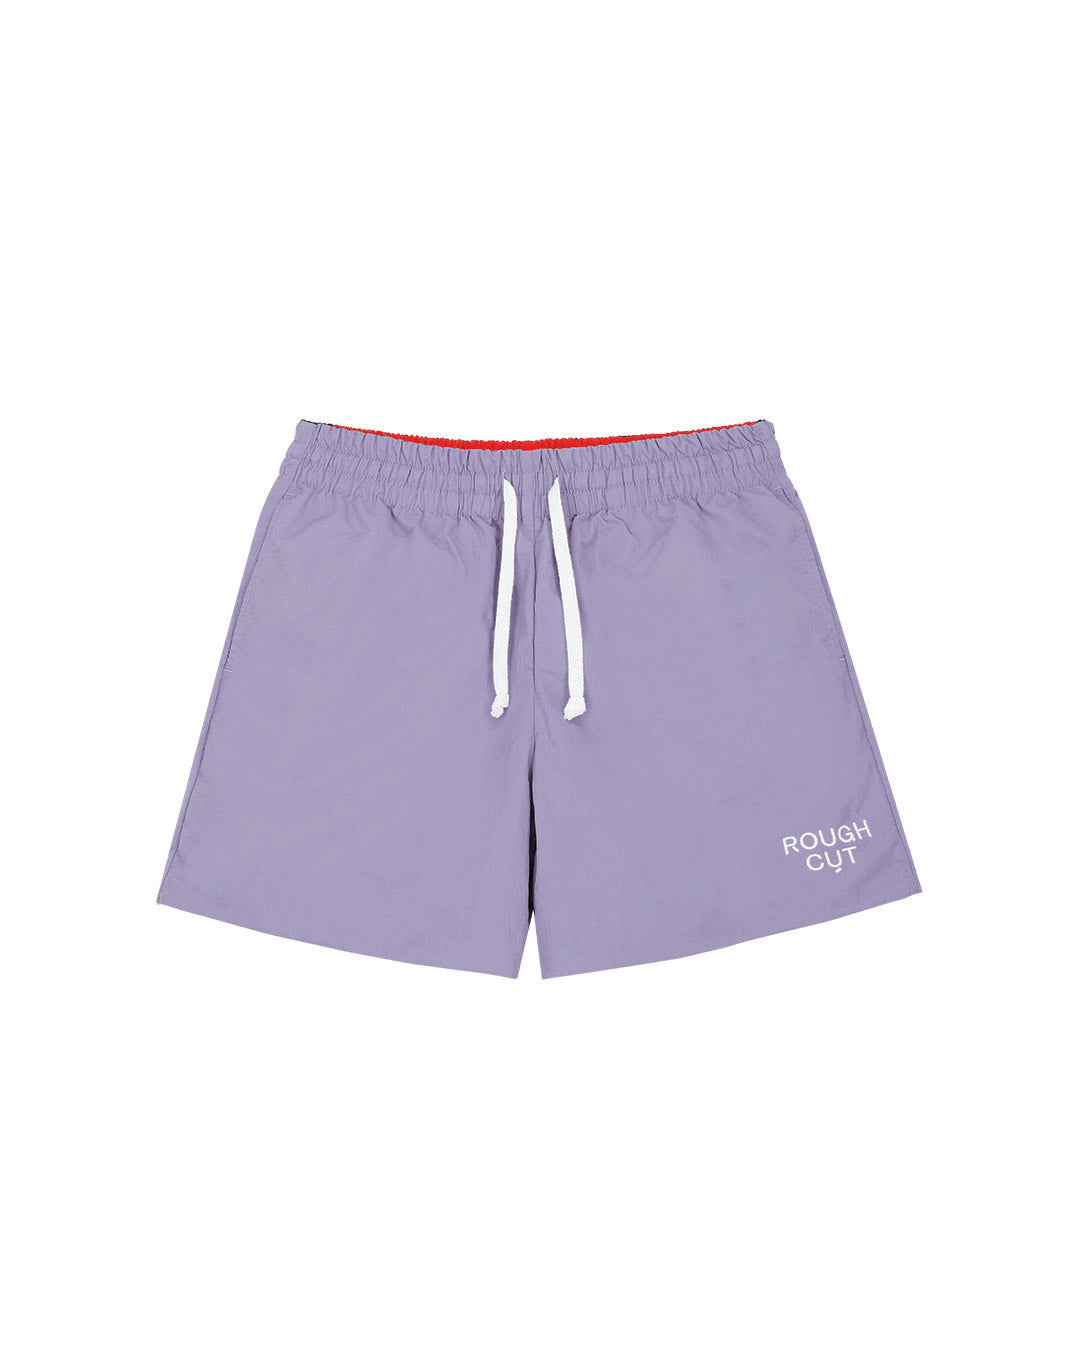 Reversible Shorts®  / Purple+Orange